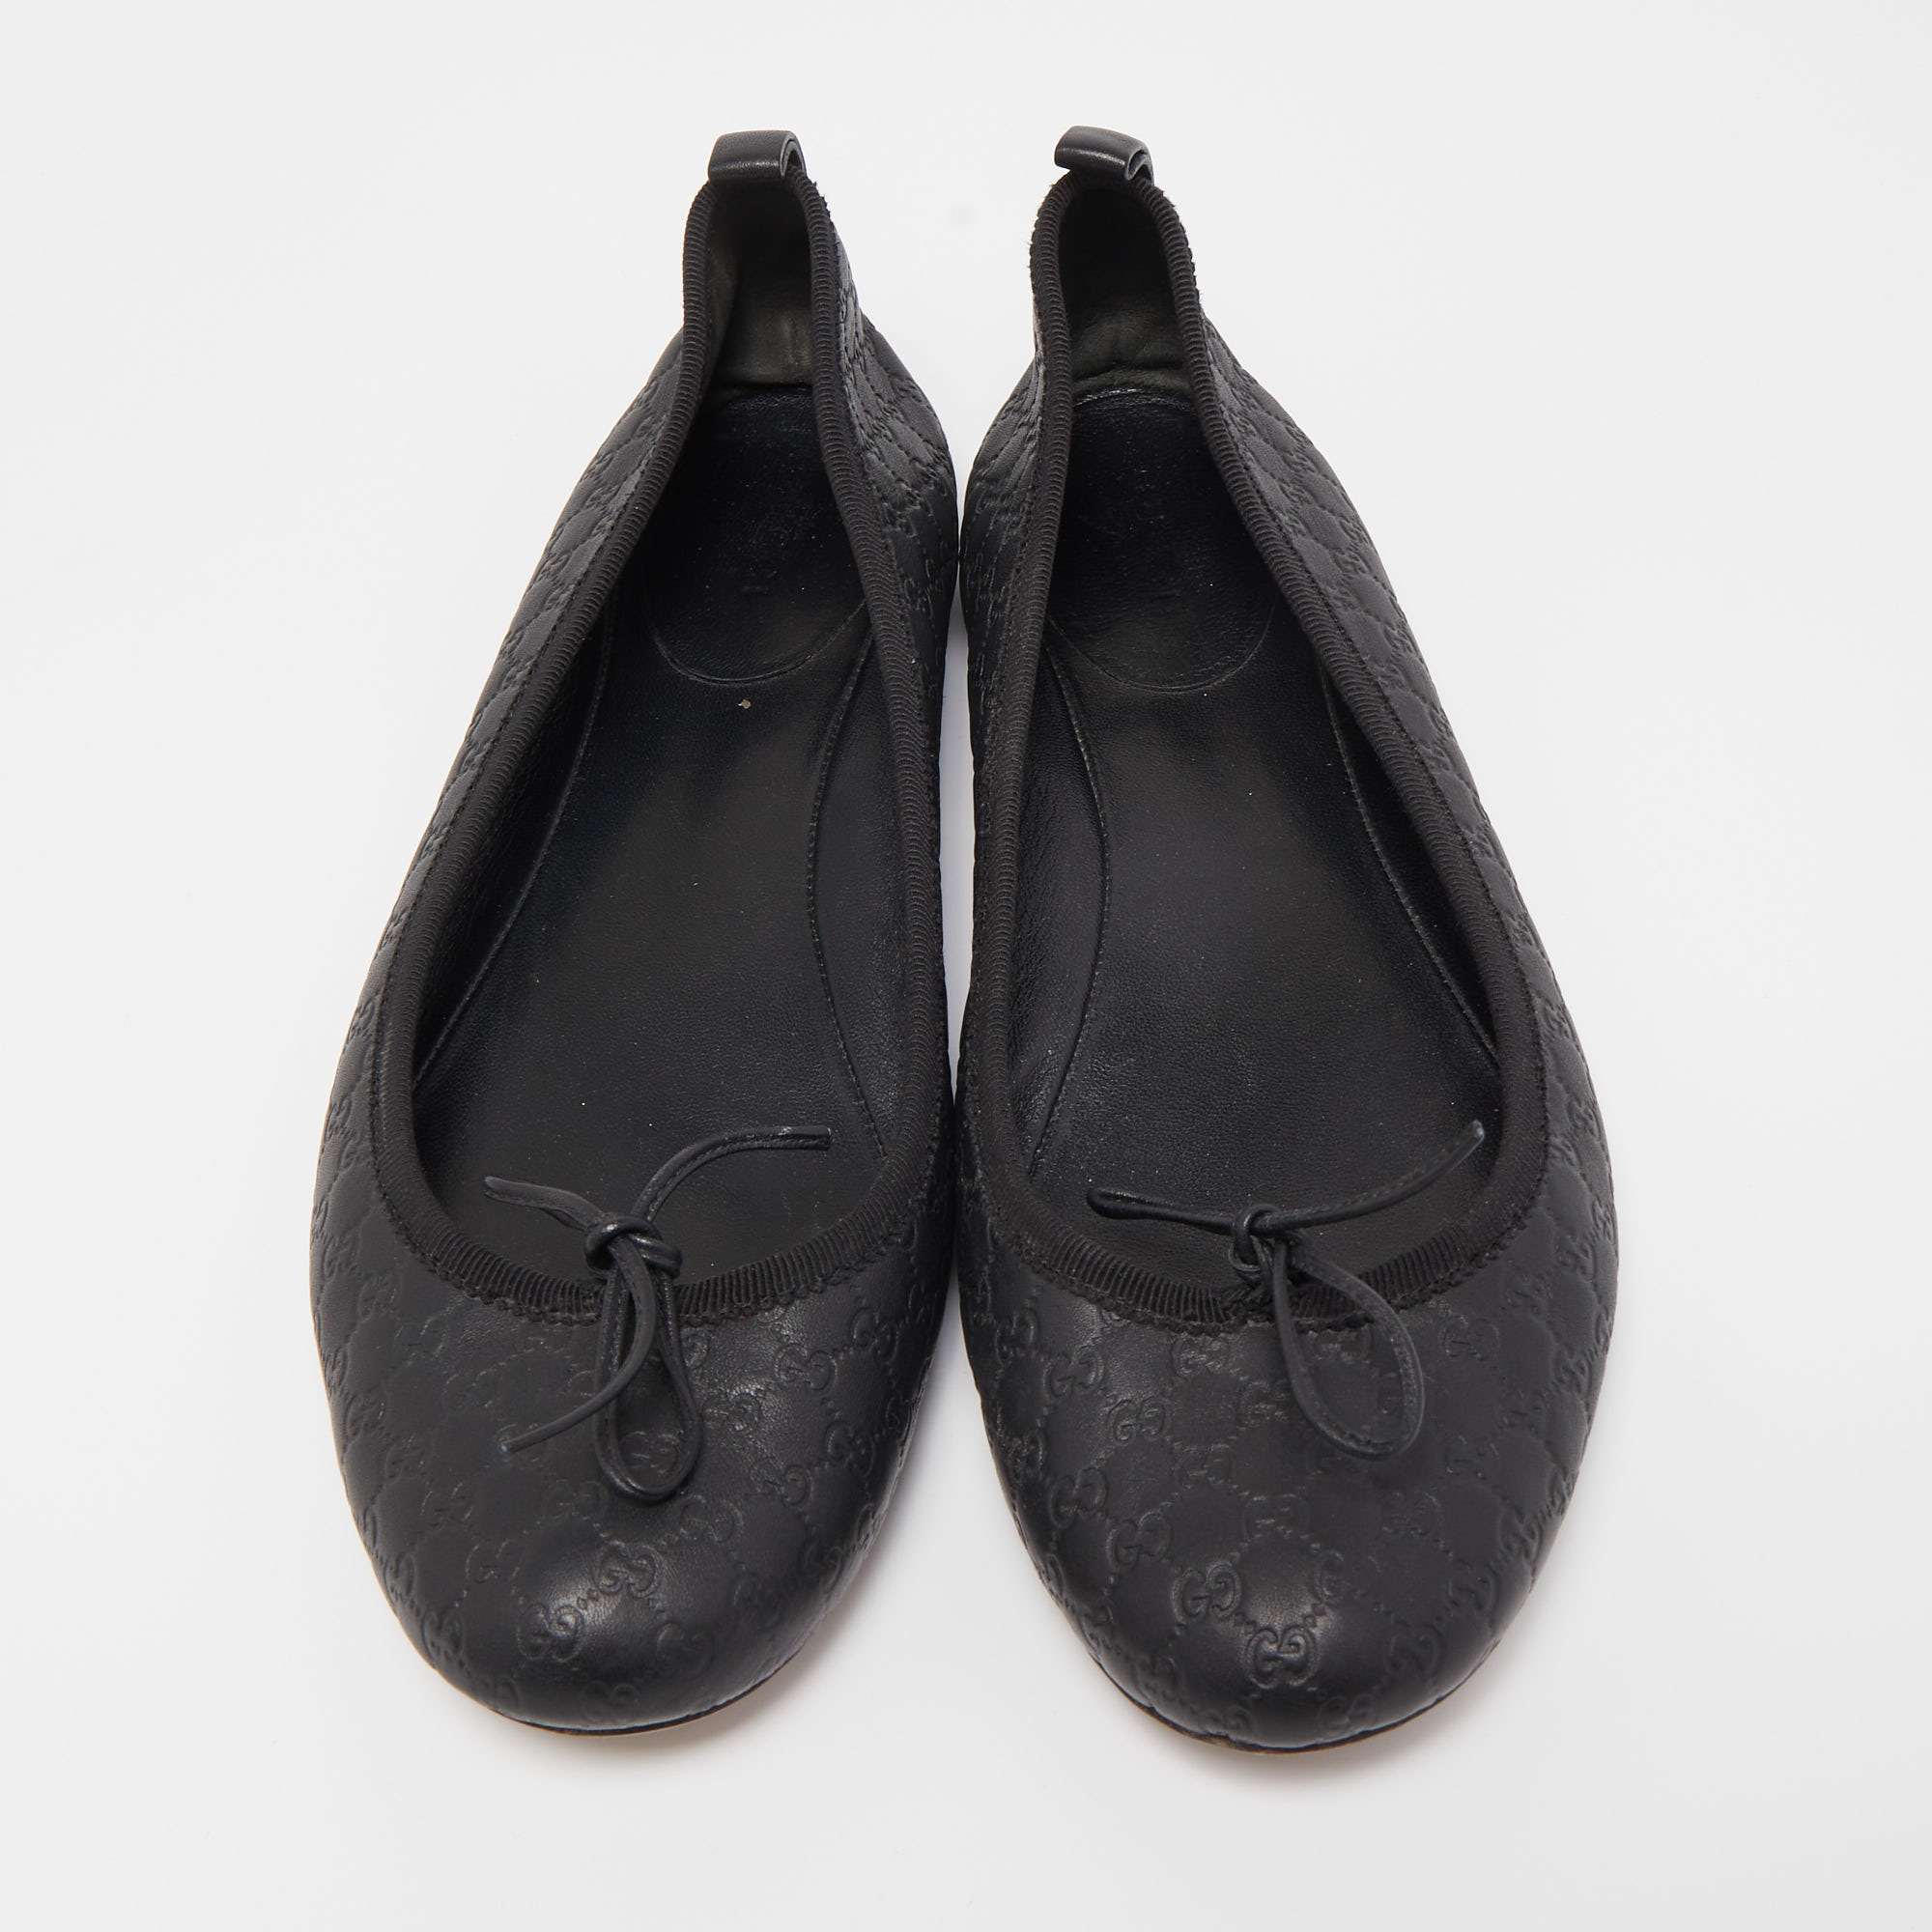 Gucci Black Leather Guccissima Ballet Flats Size 39